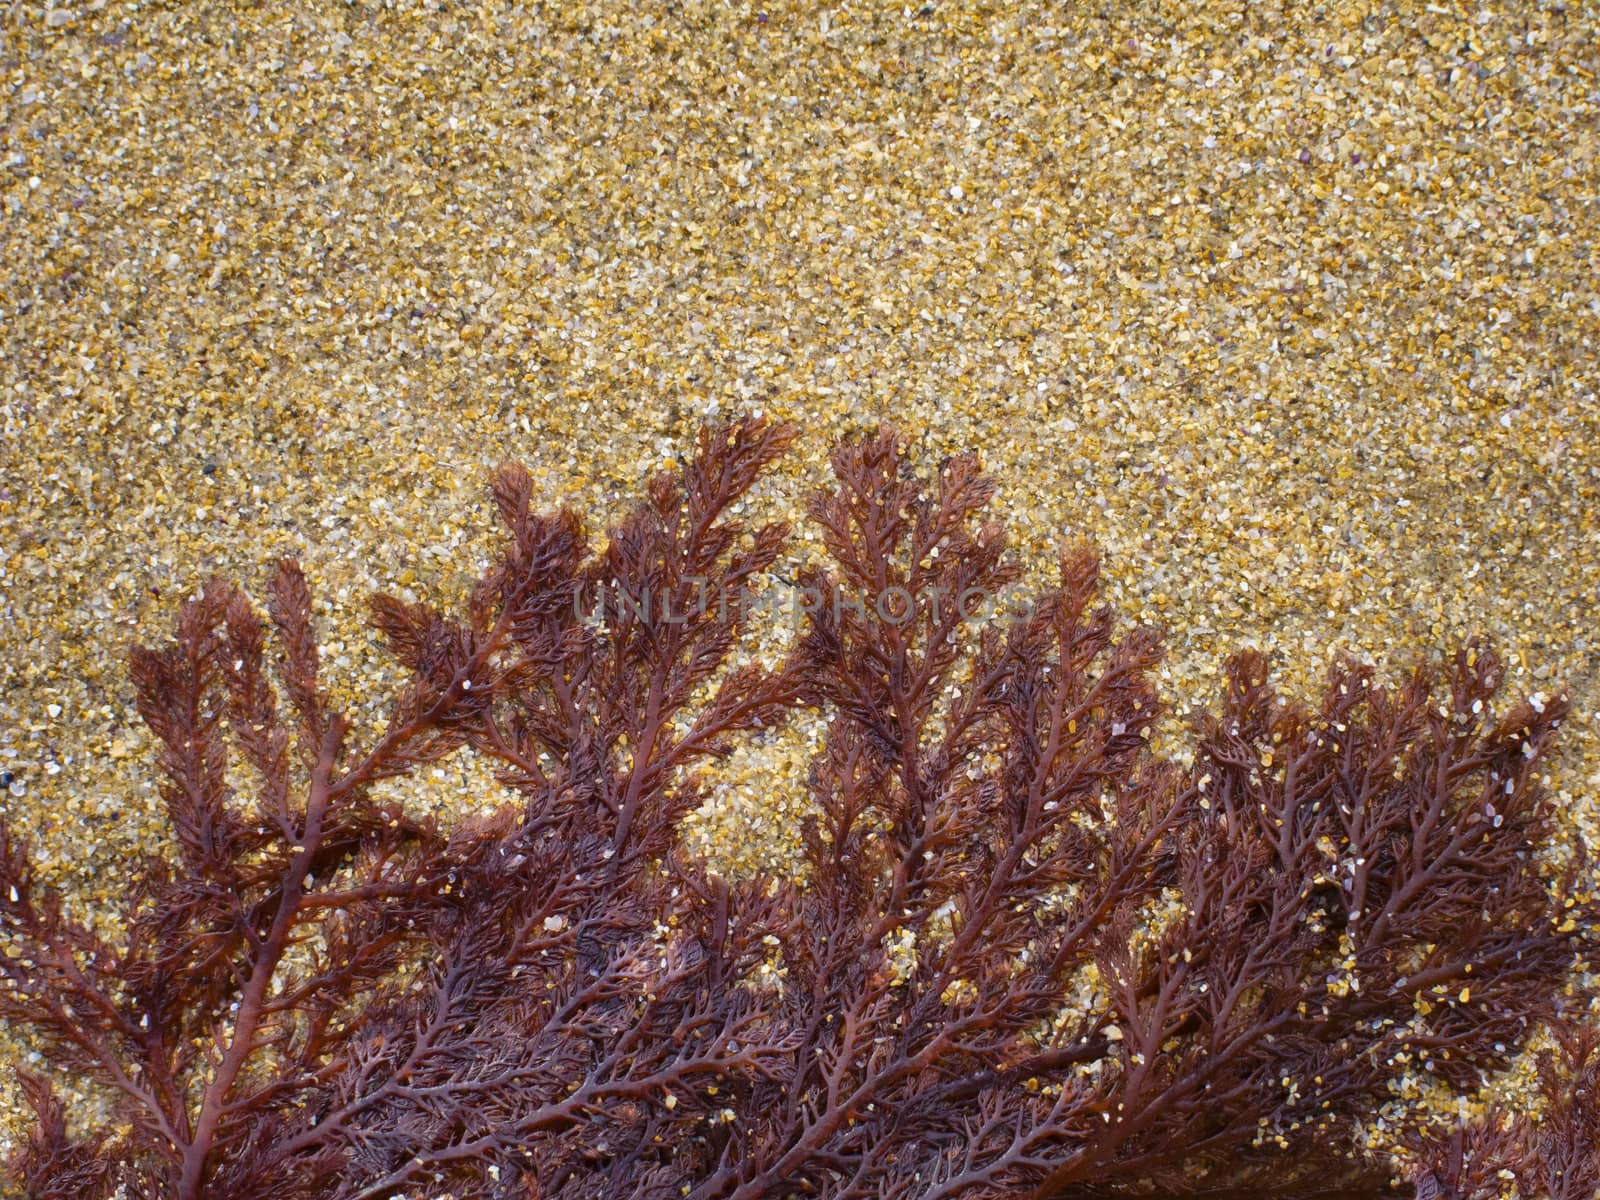 Background of a kelp on the sand. North Spain coastline.